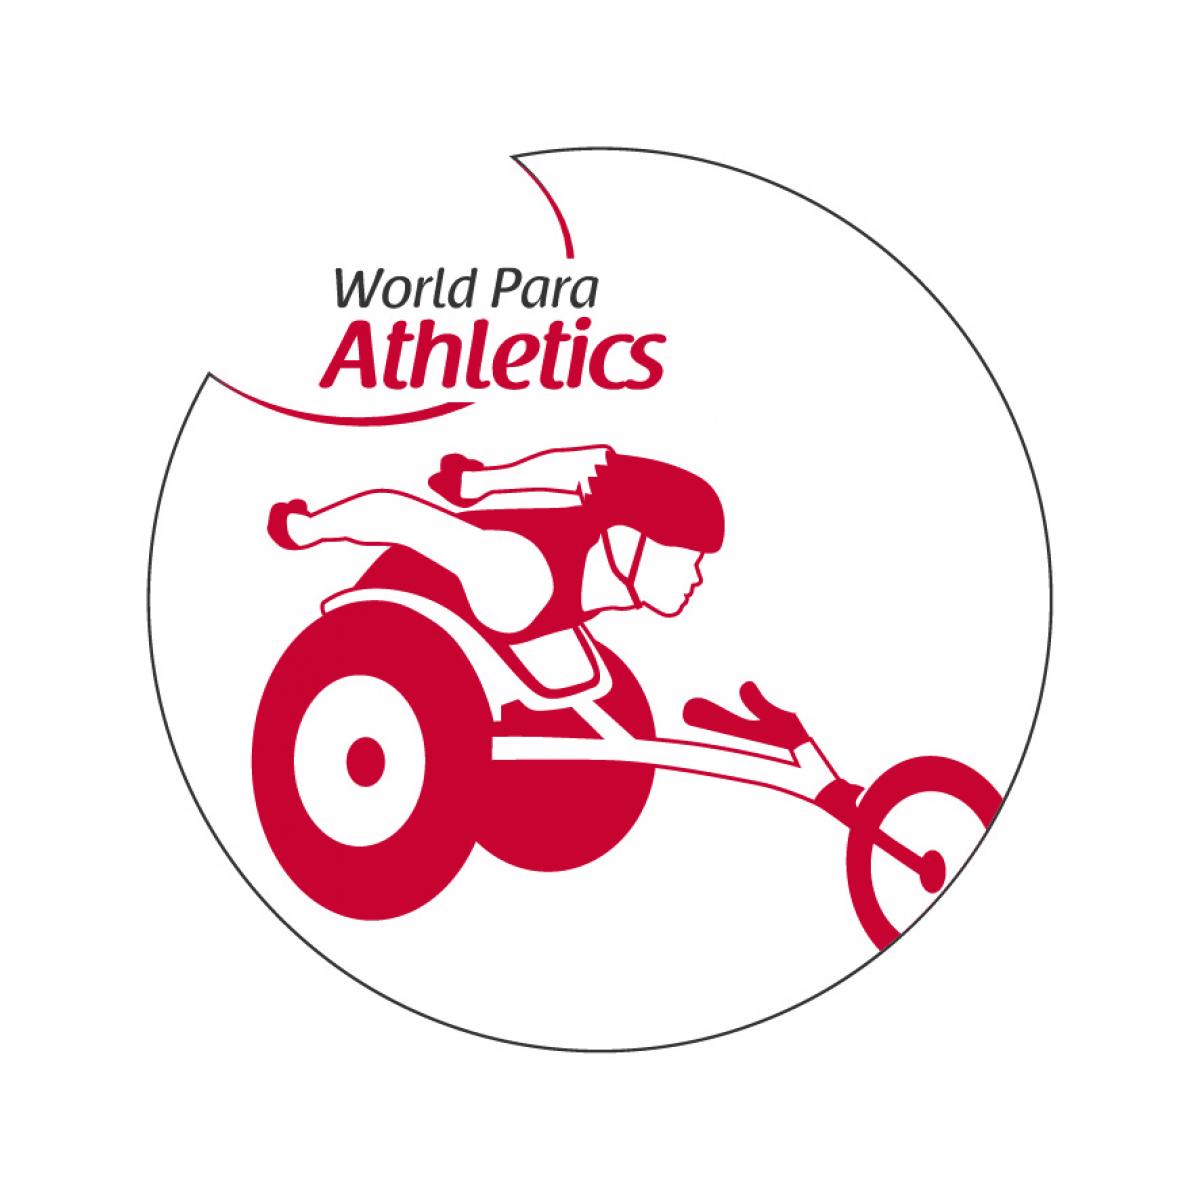 The official logo of World Para Athletics